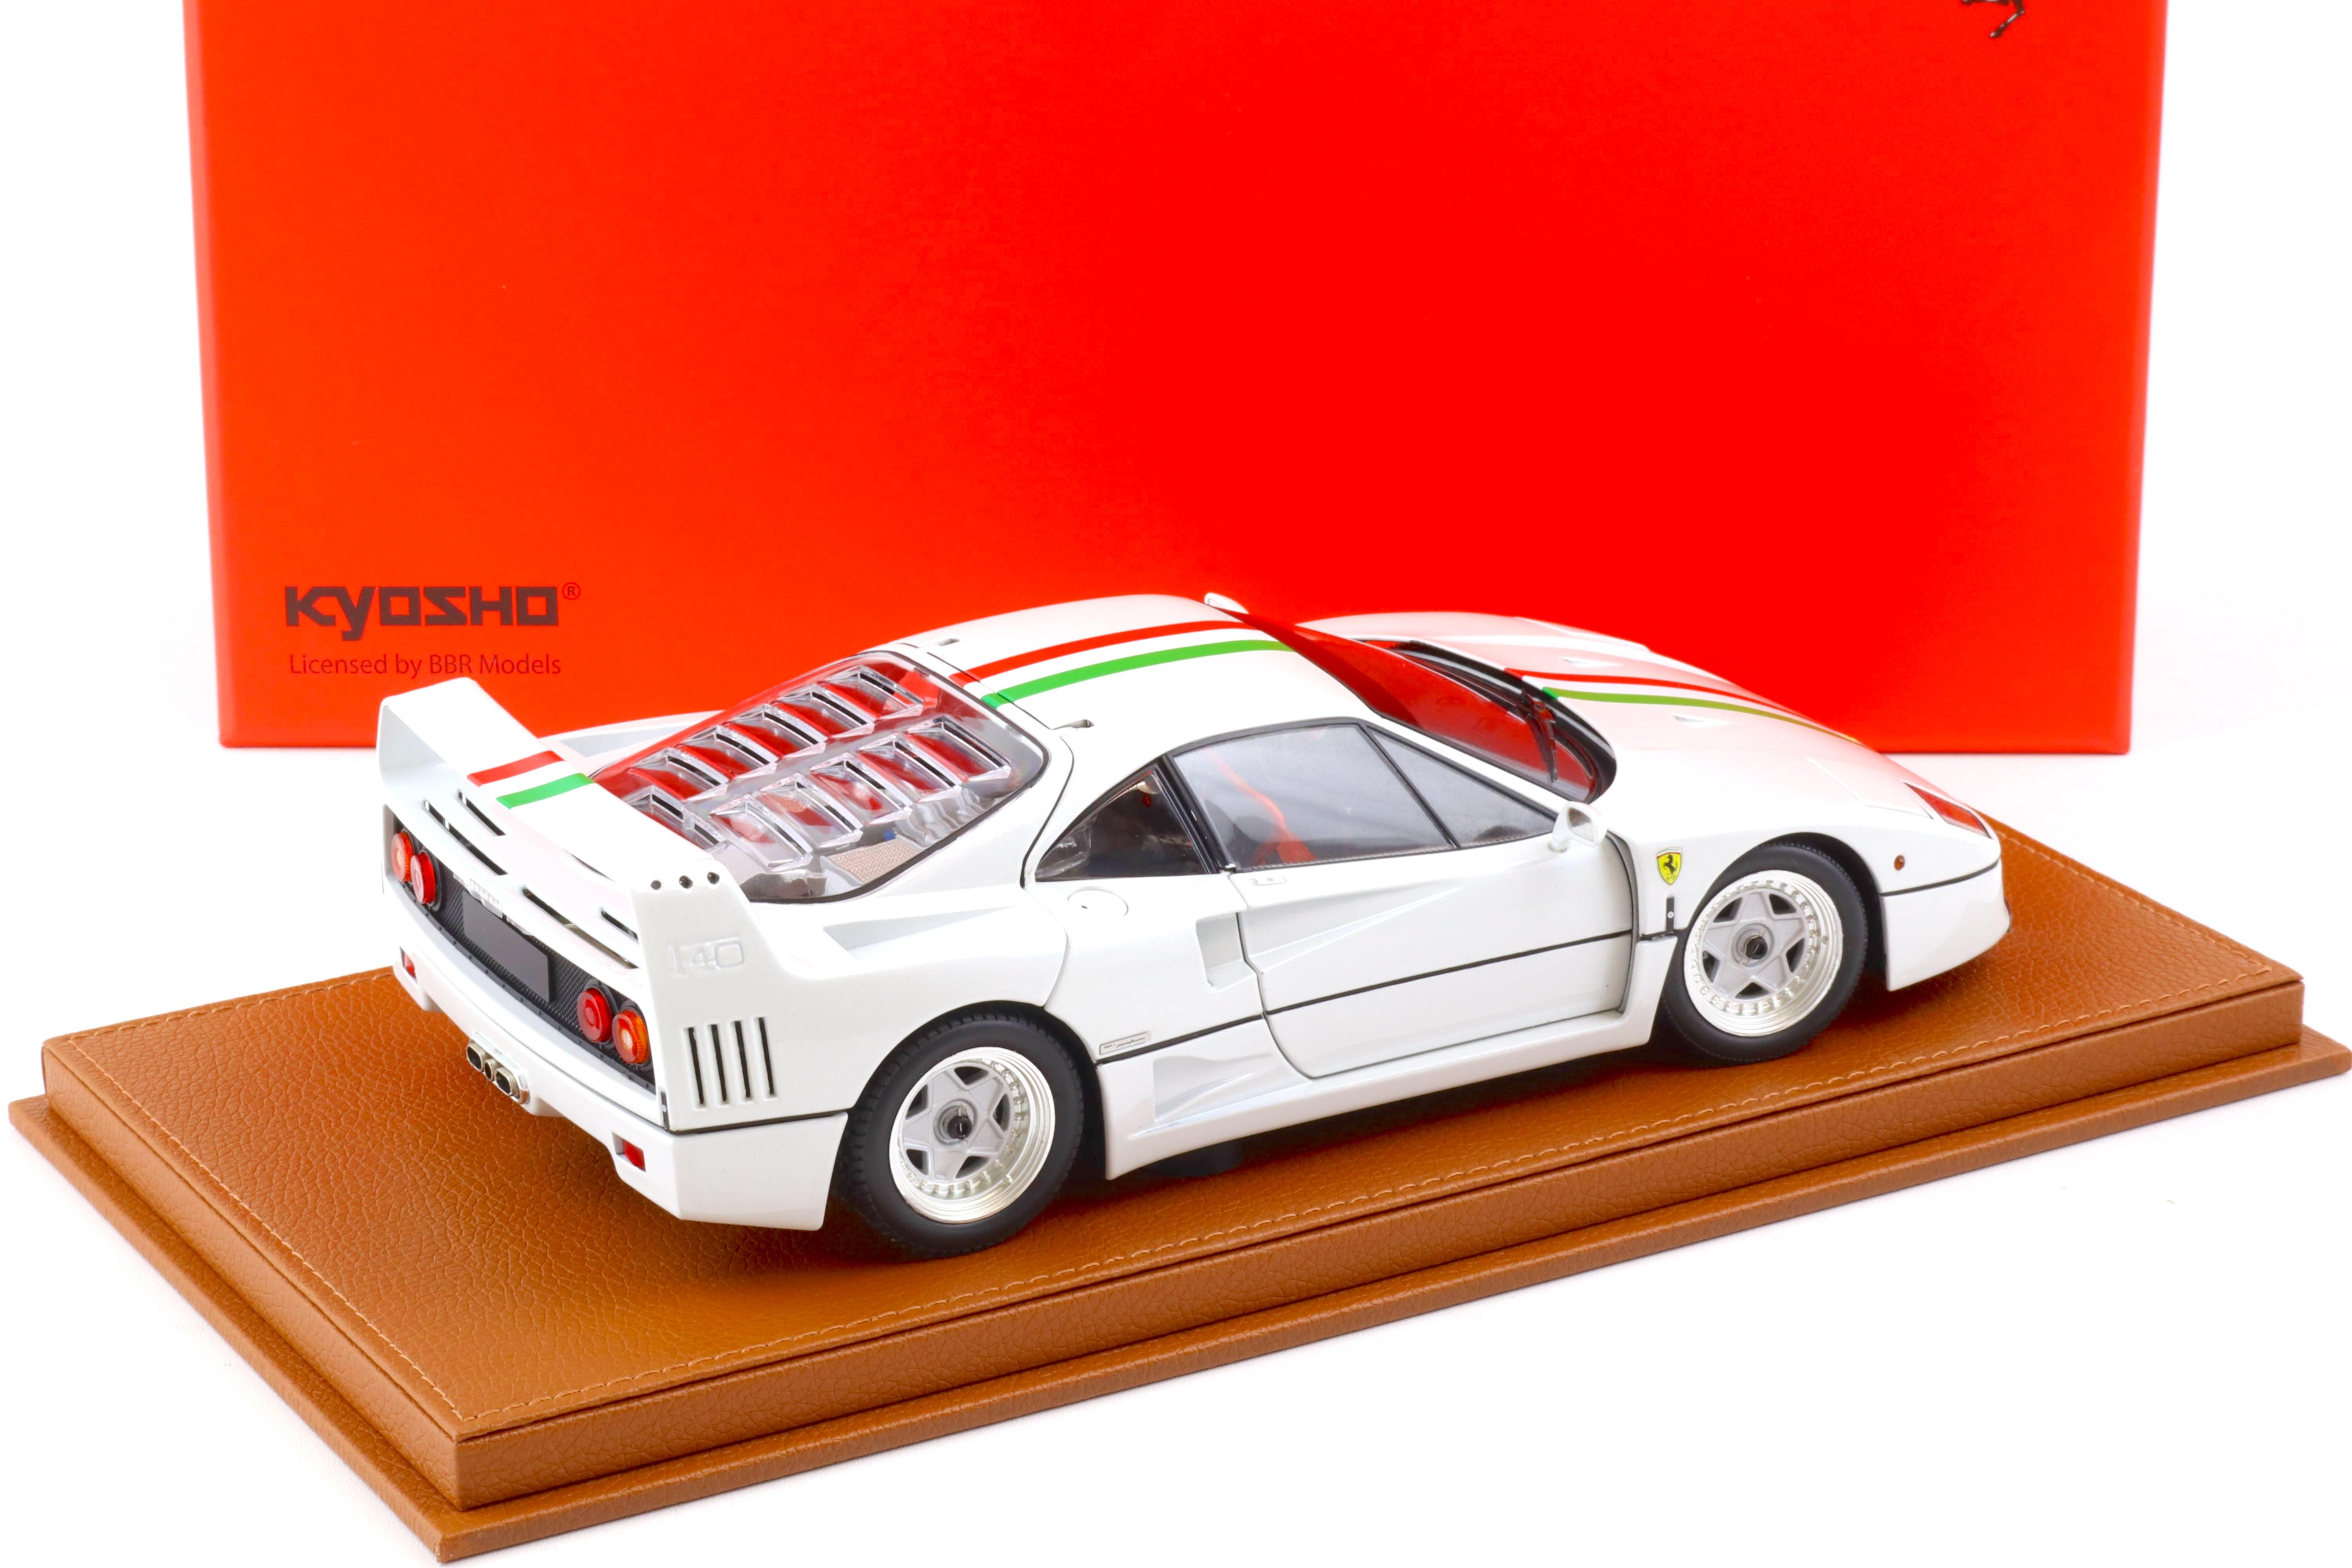 1:18 BBR Kyosho Ferrari F40 metallic white/ Italian Flag with Showcase - Limited 78 pcs.